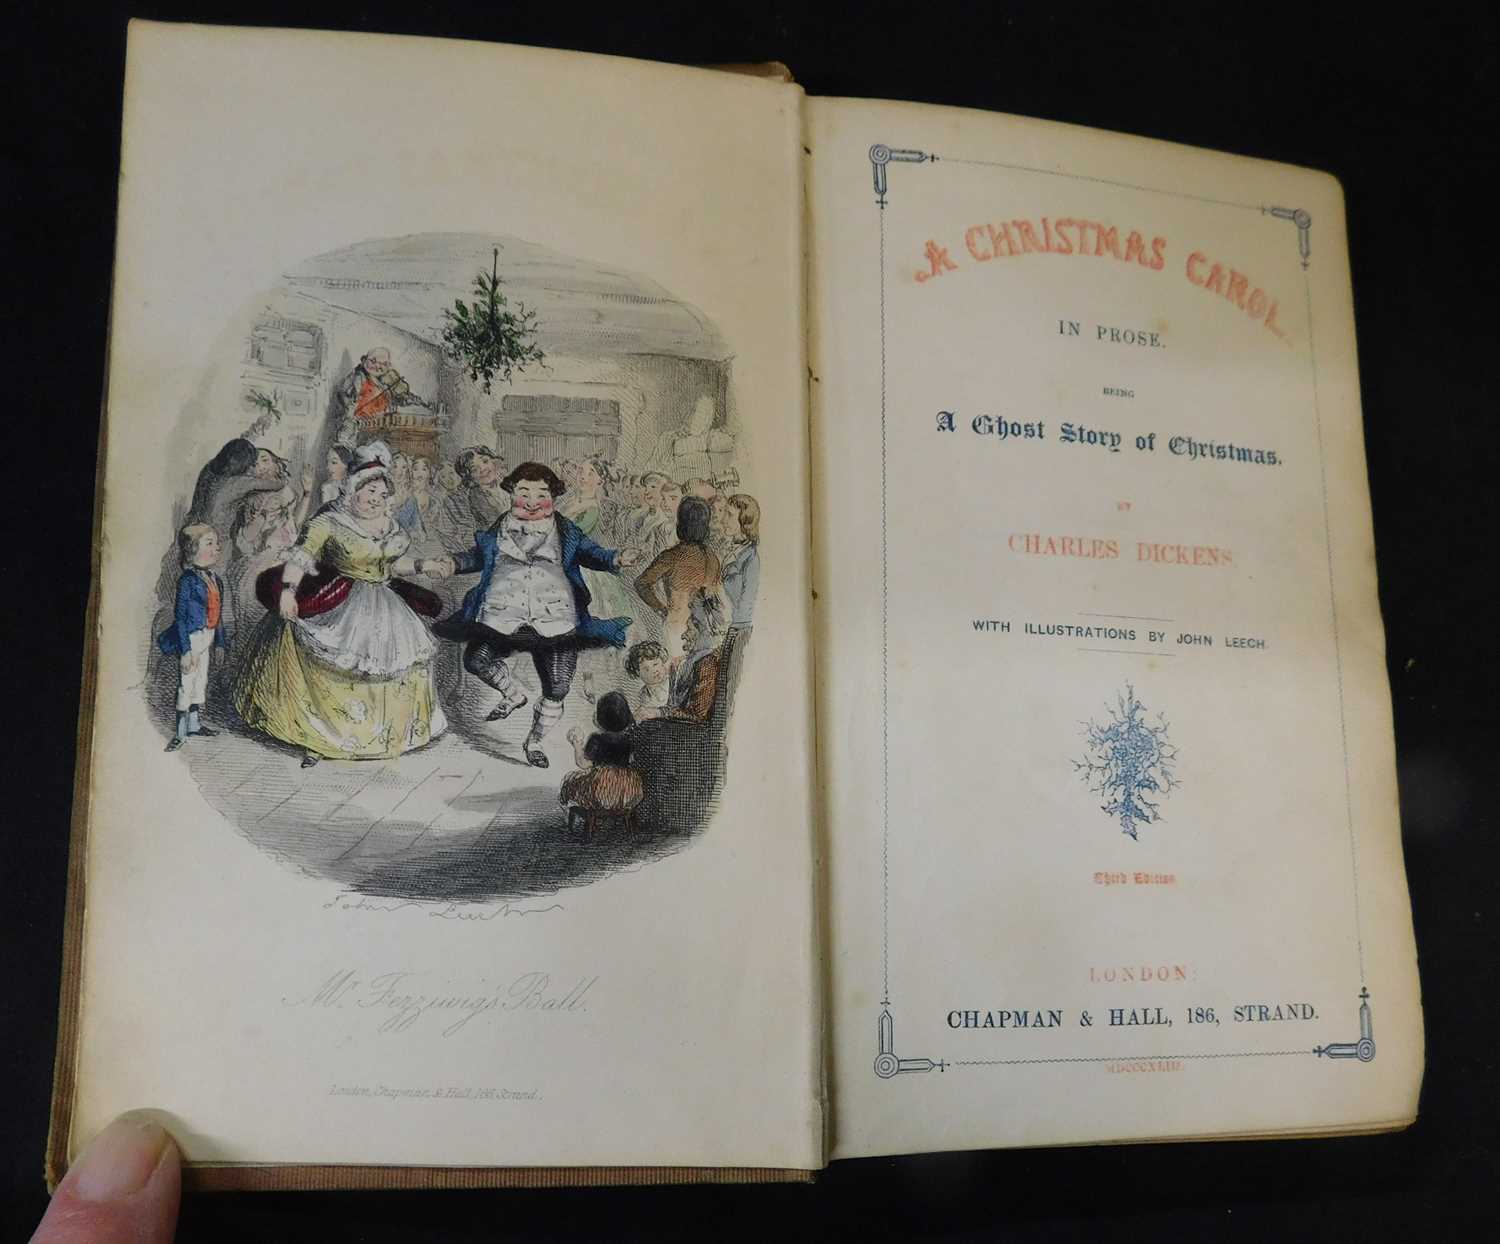 CHARLES DICKENS: A CHRISTMAS CAROL, ill John Leech, London, Chapman & Hall, 1843, 3rd edition, 4 - Image 2 of 4